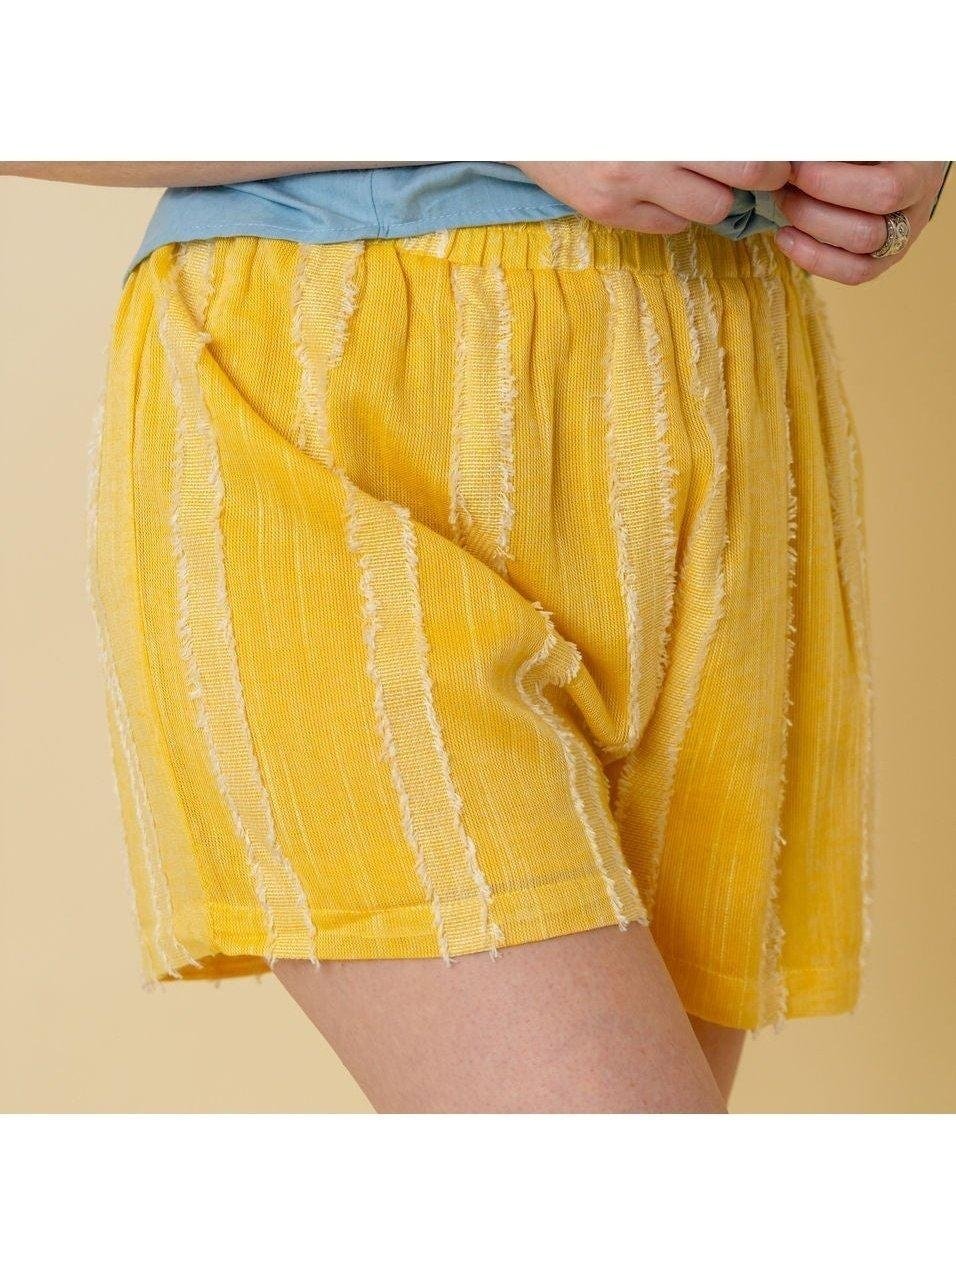 Yellow and White Striped Elastic Waist Shorts - Lolo Viv Boutique